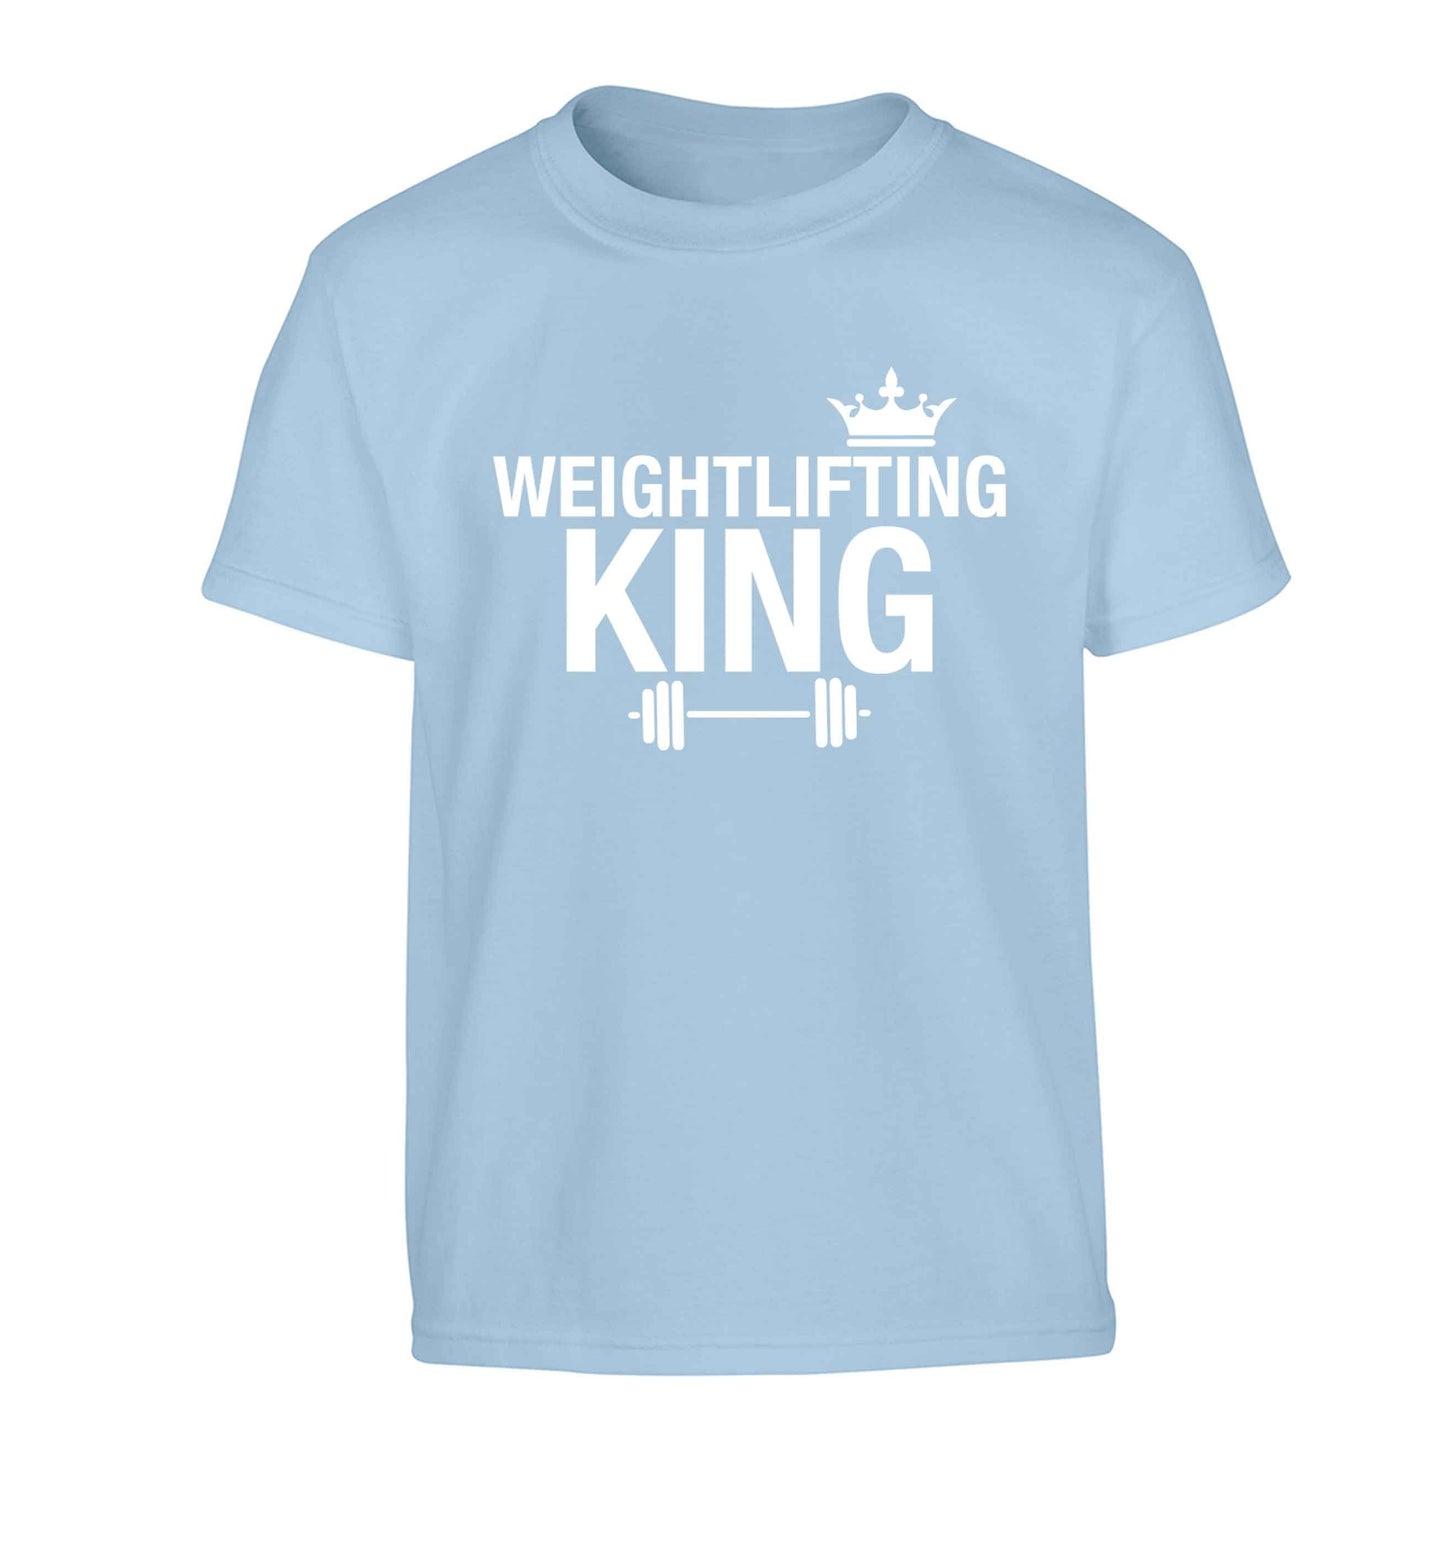 Weightlifting king Children's light blue Tshirt 12-13 Years